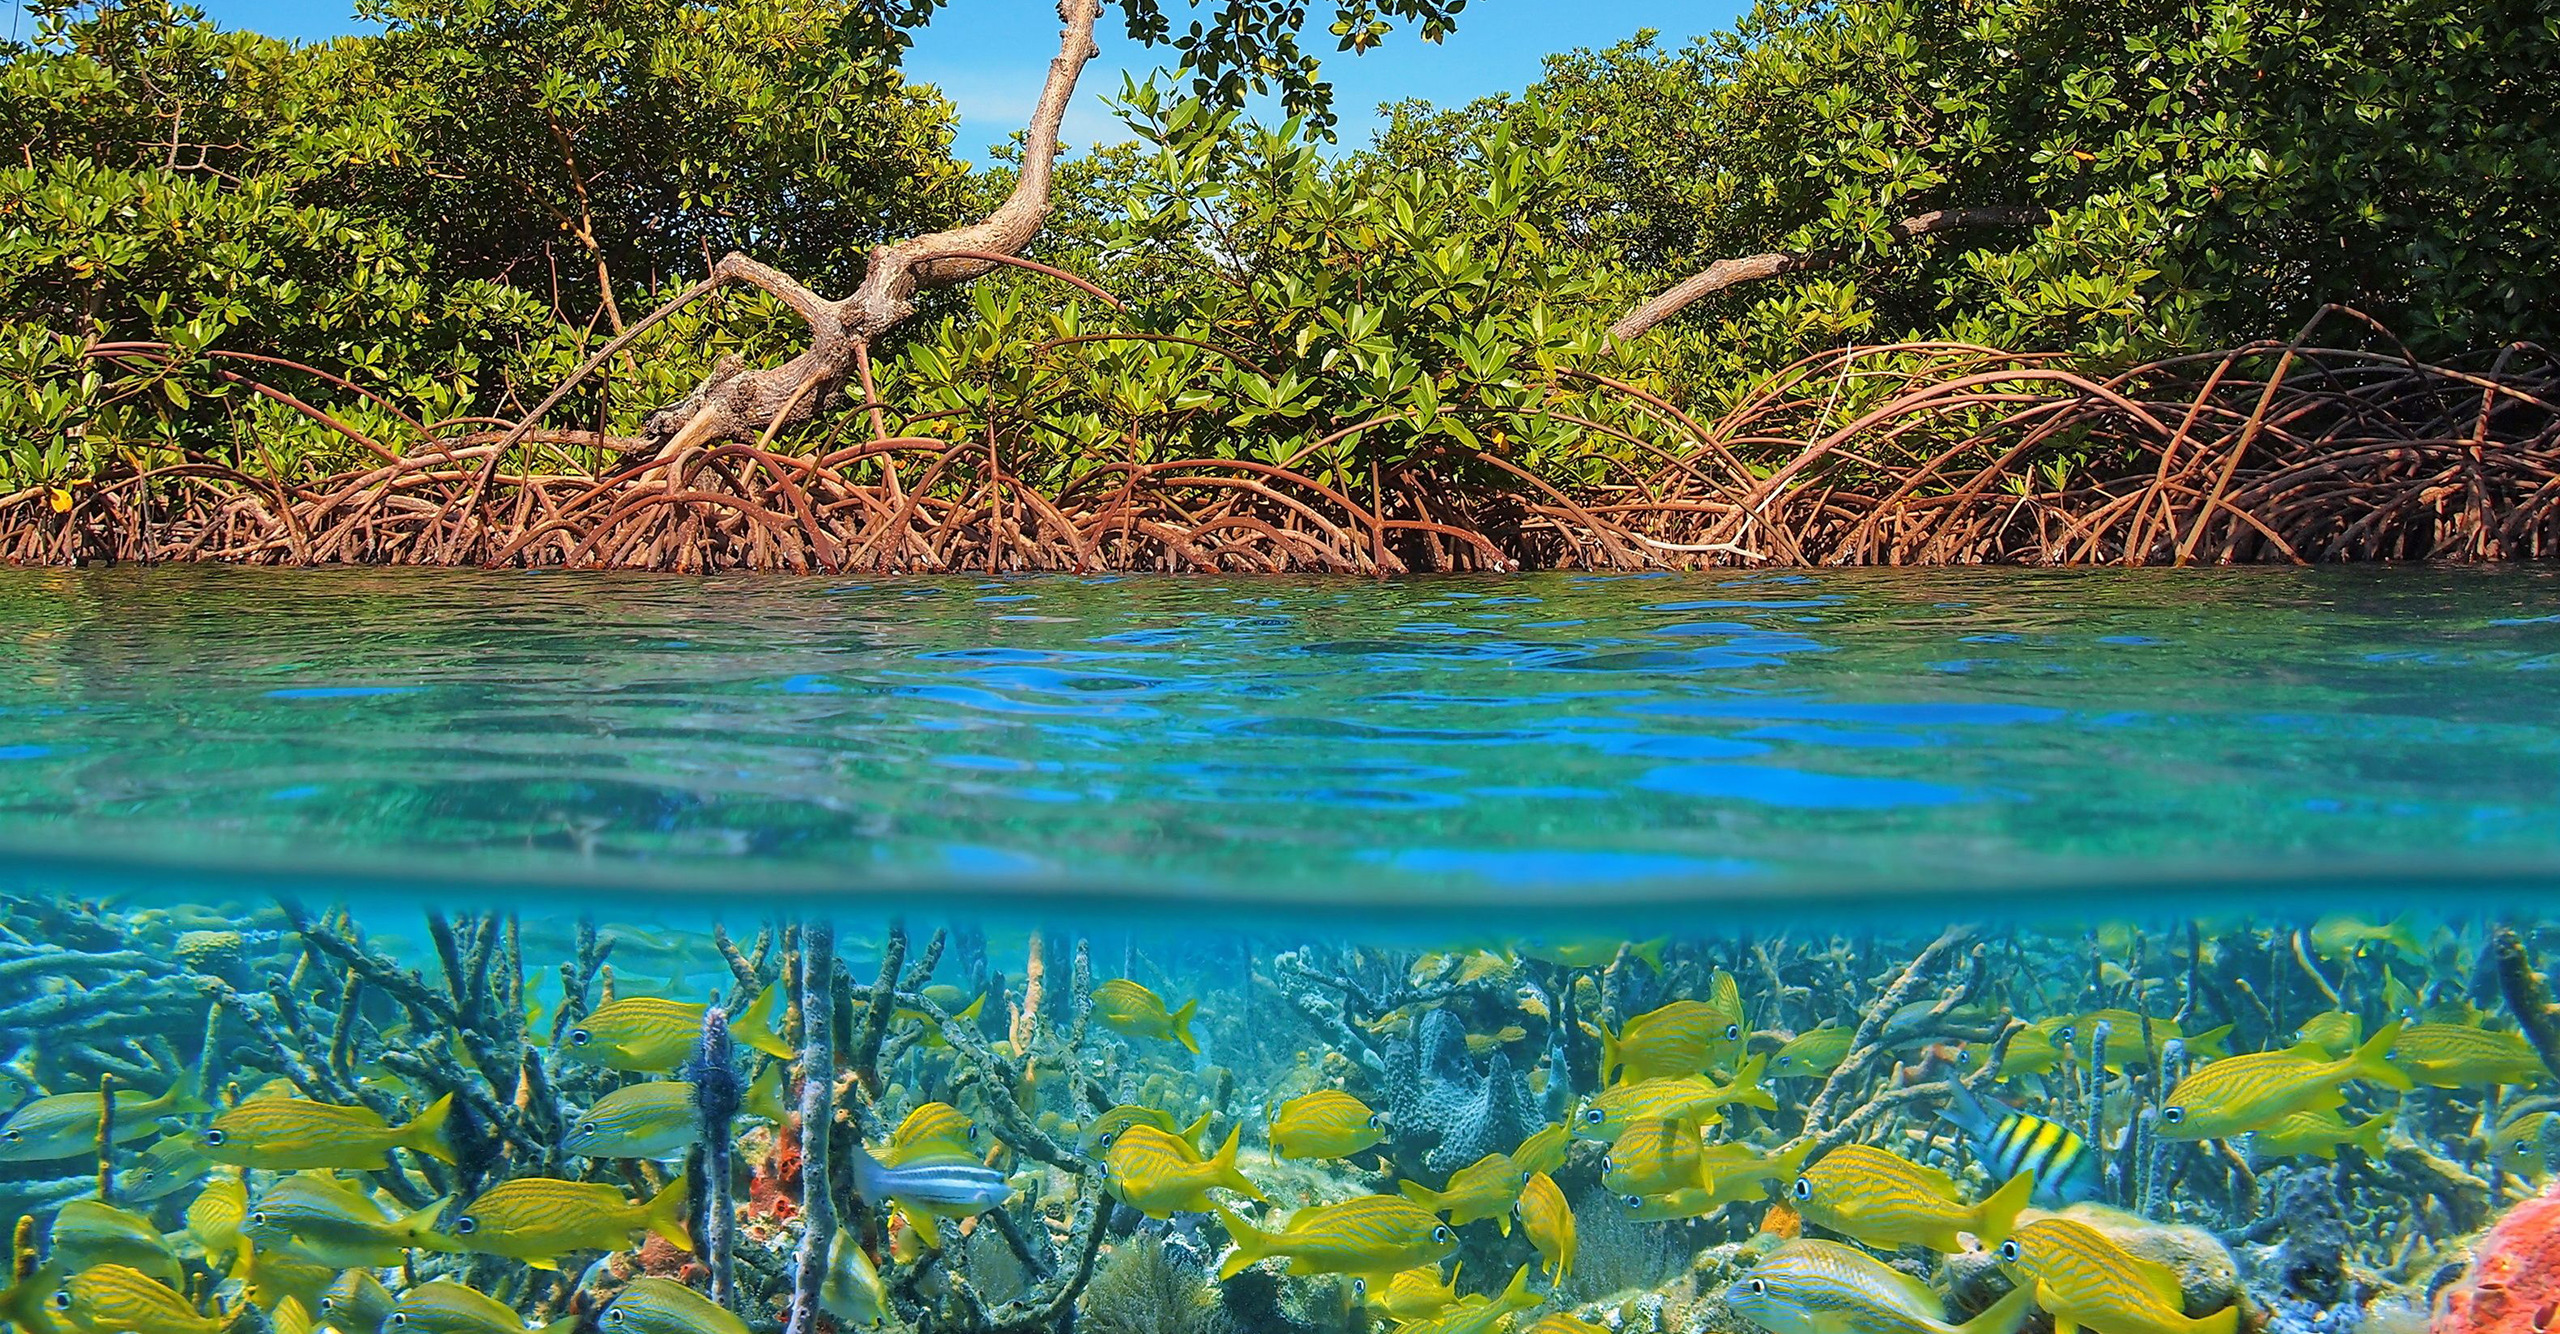 Developing and restoring mangrove habitats using dredged sediments